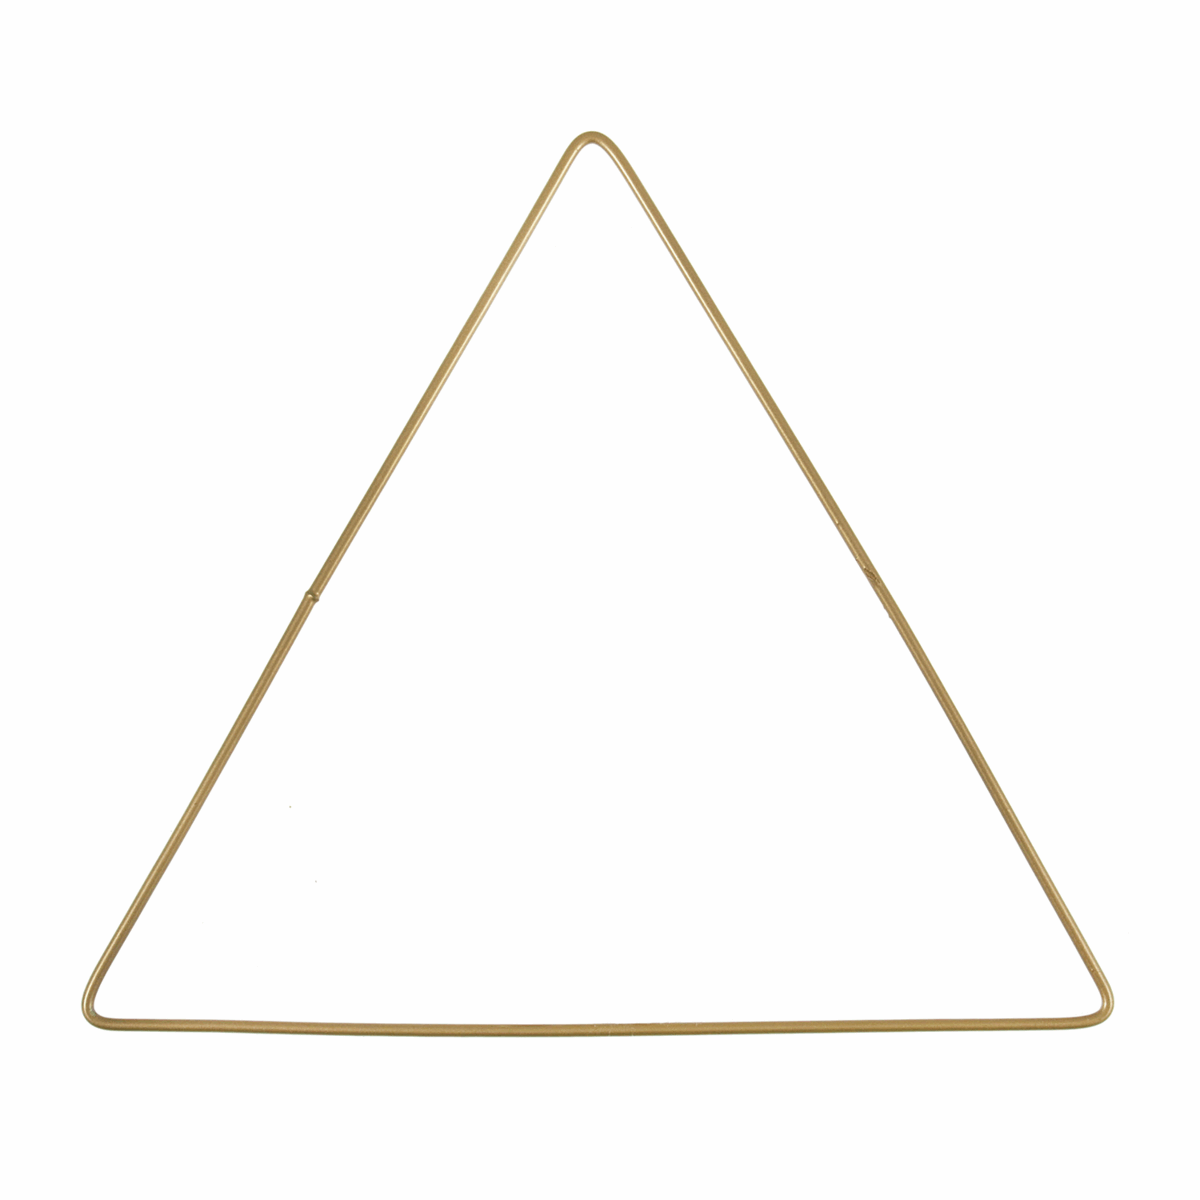 Trimits Accessories Trimits Metal Craft Hoops - Gold Triangle 5022306796376